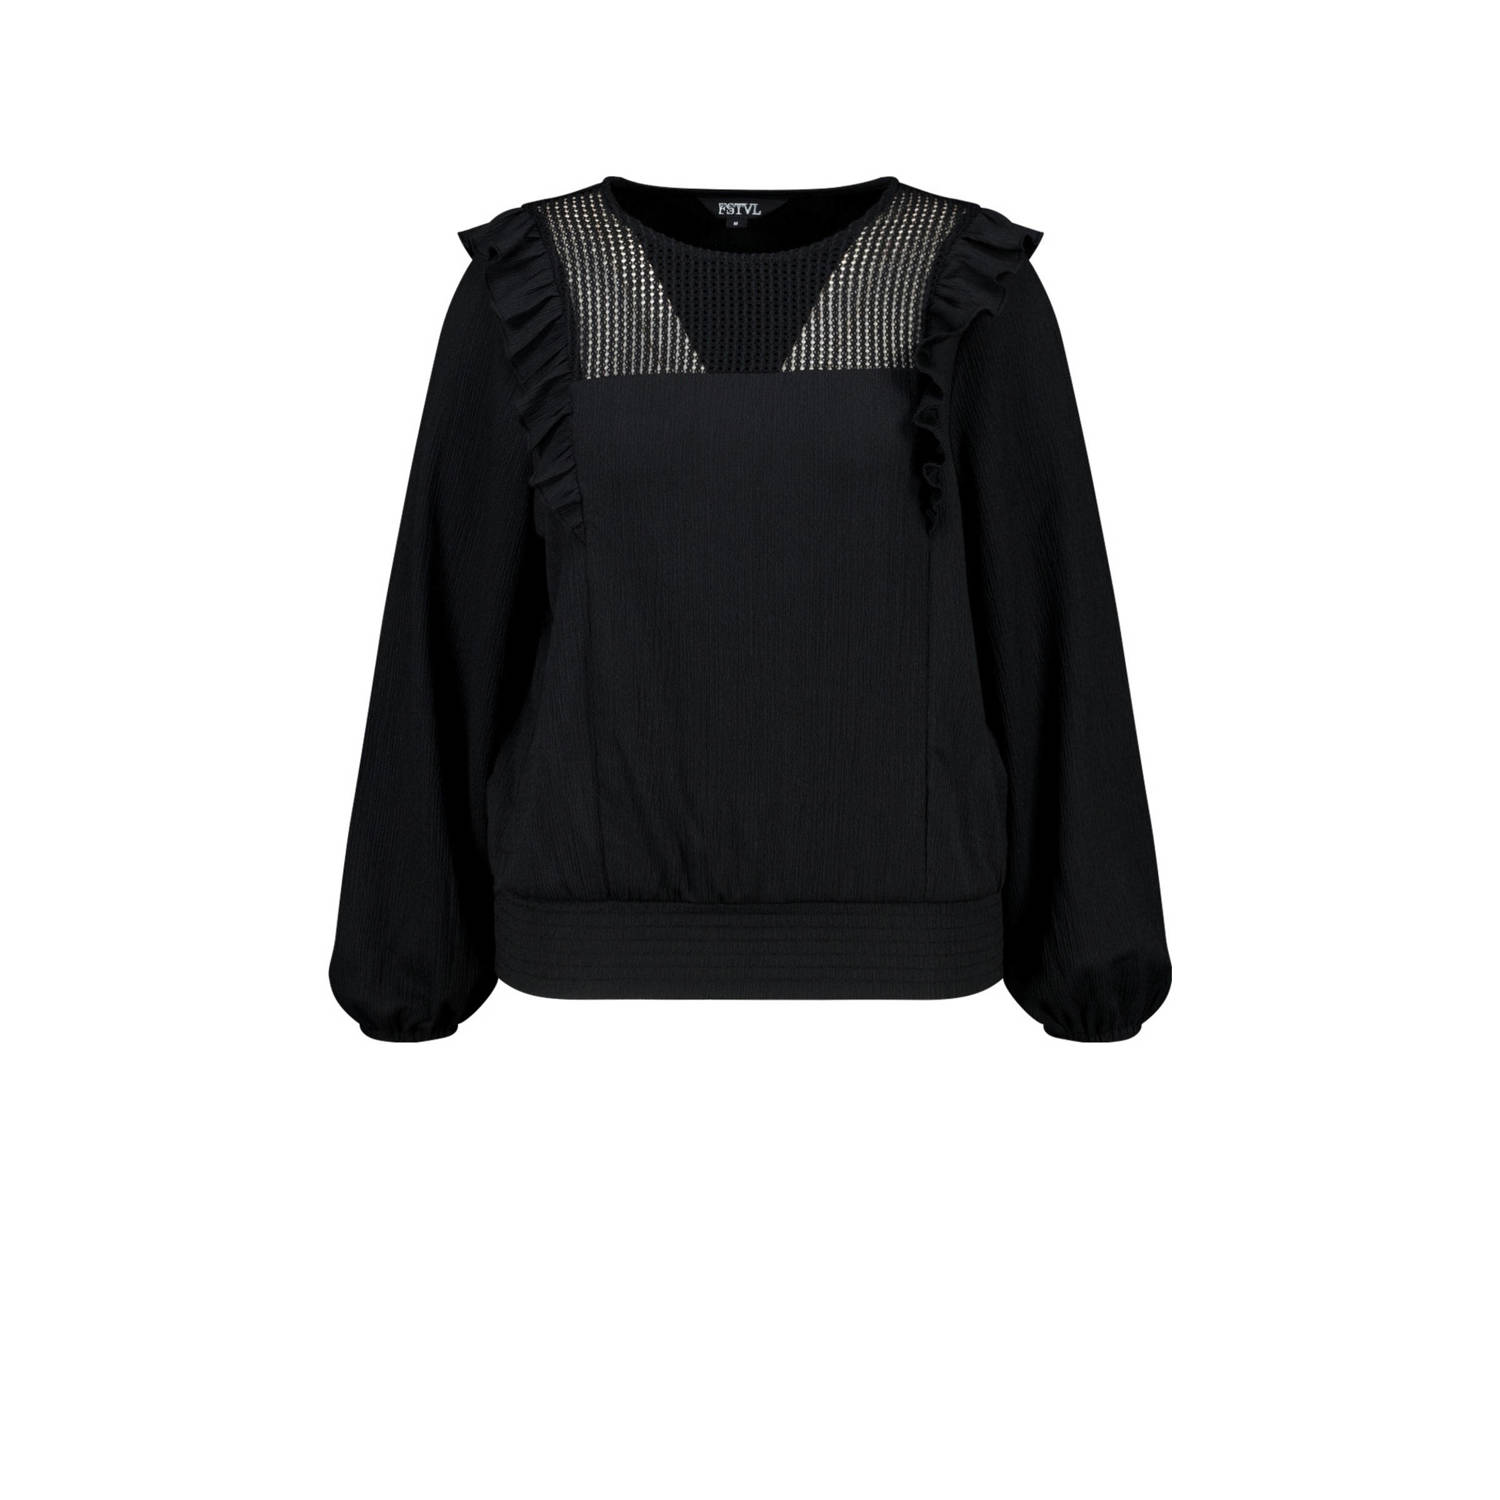 MS Mode blousetop met pailletten zwart